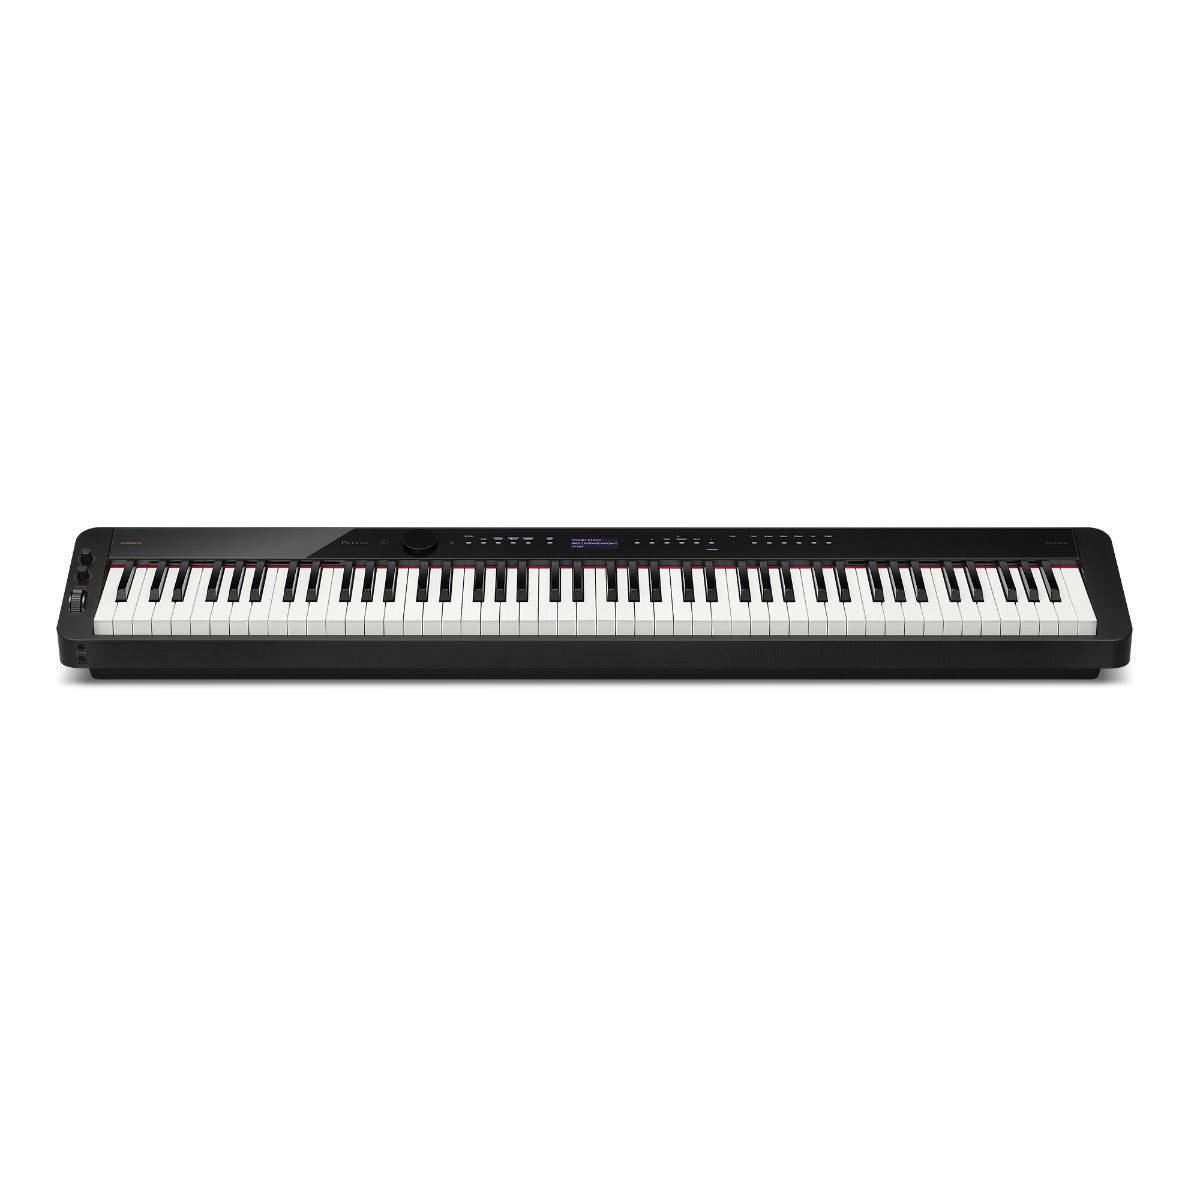 Casio PX-S3100 Digital Piano - Black, View 3